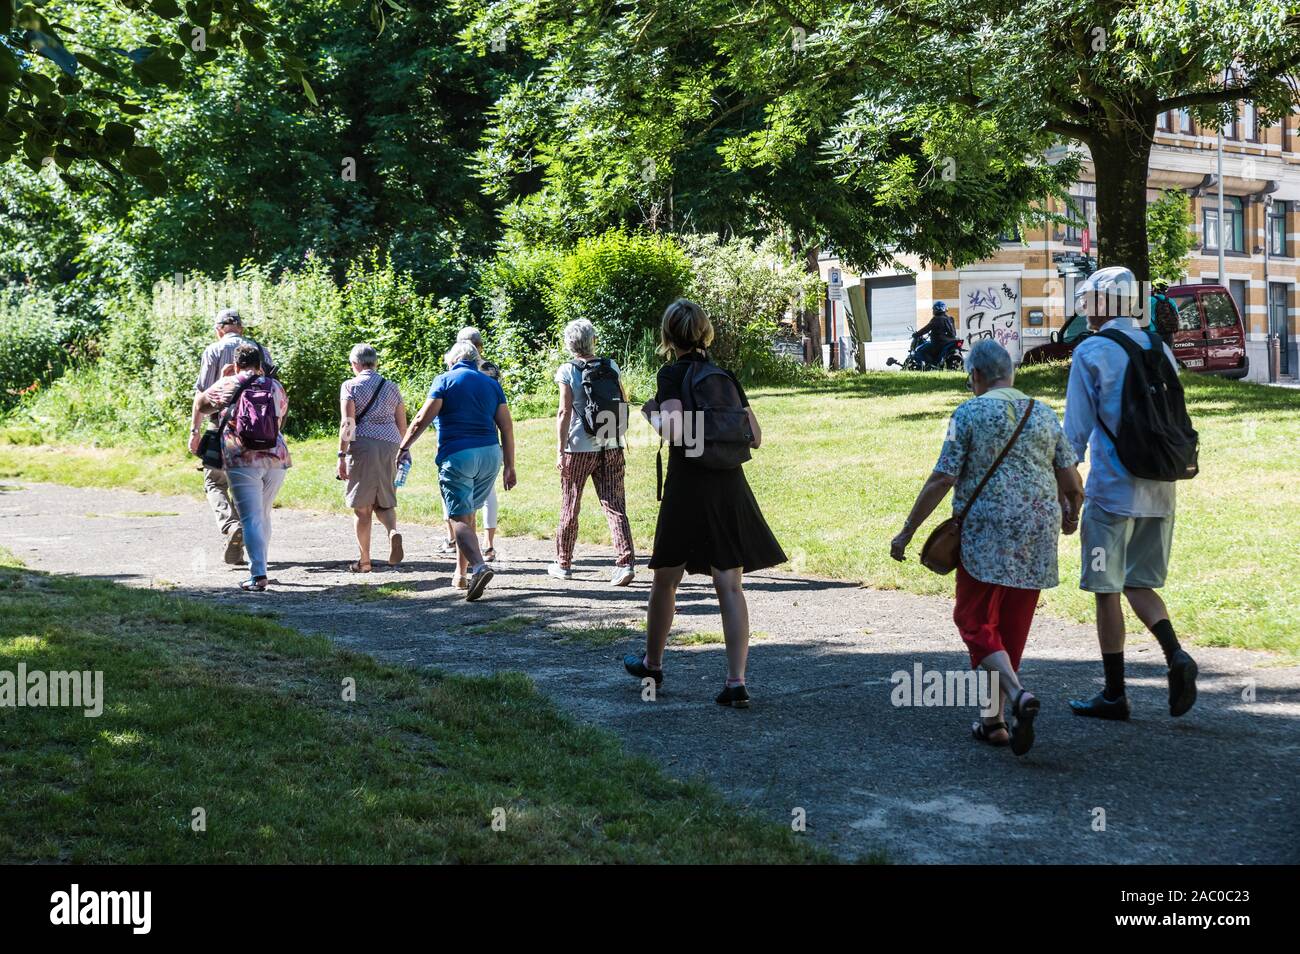 Schaerbeek, Brussels / Belgium - 06 29 2019: Group of local tourists walking in a green park Stock Photo